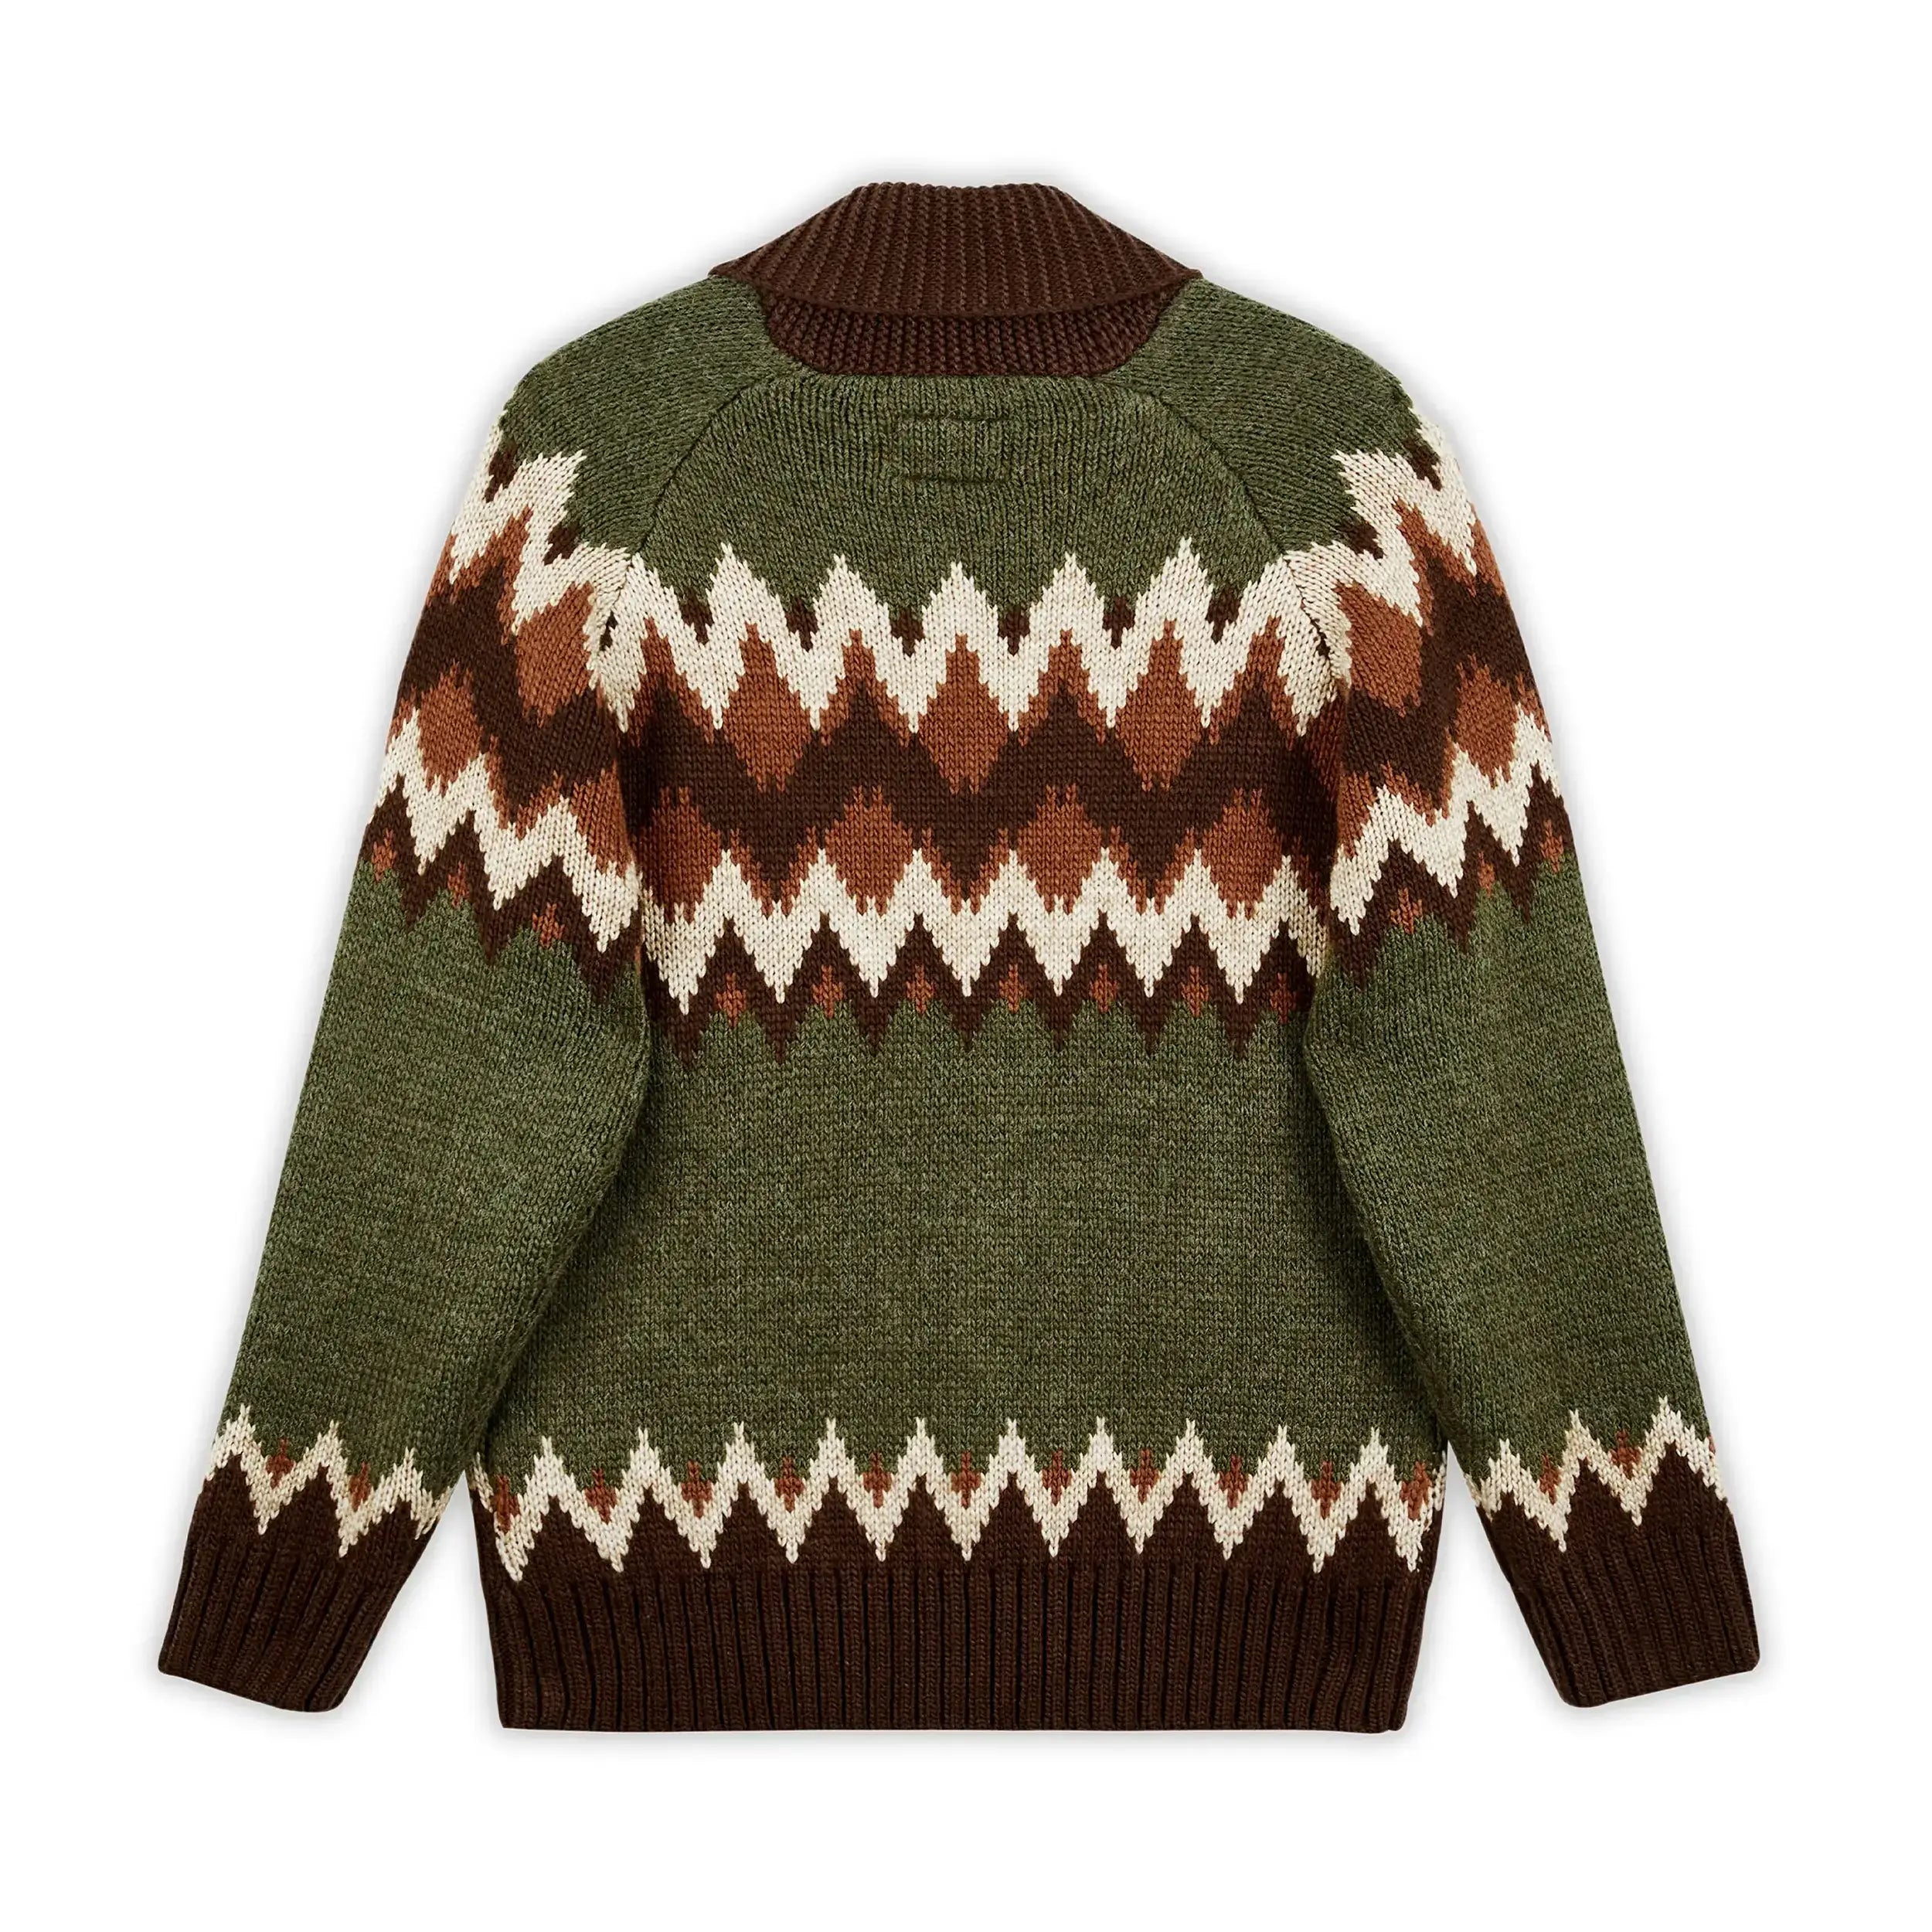 M's Northern Cardigan Sweater